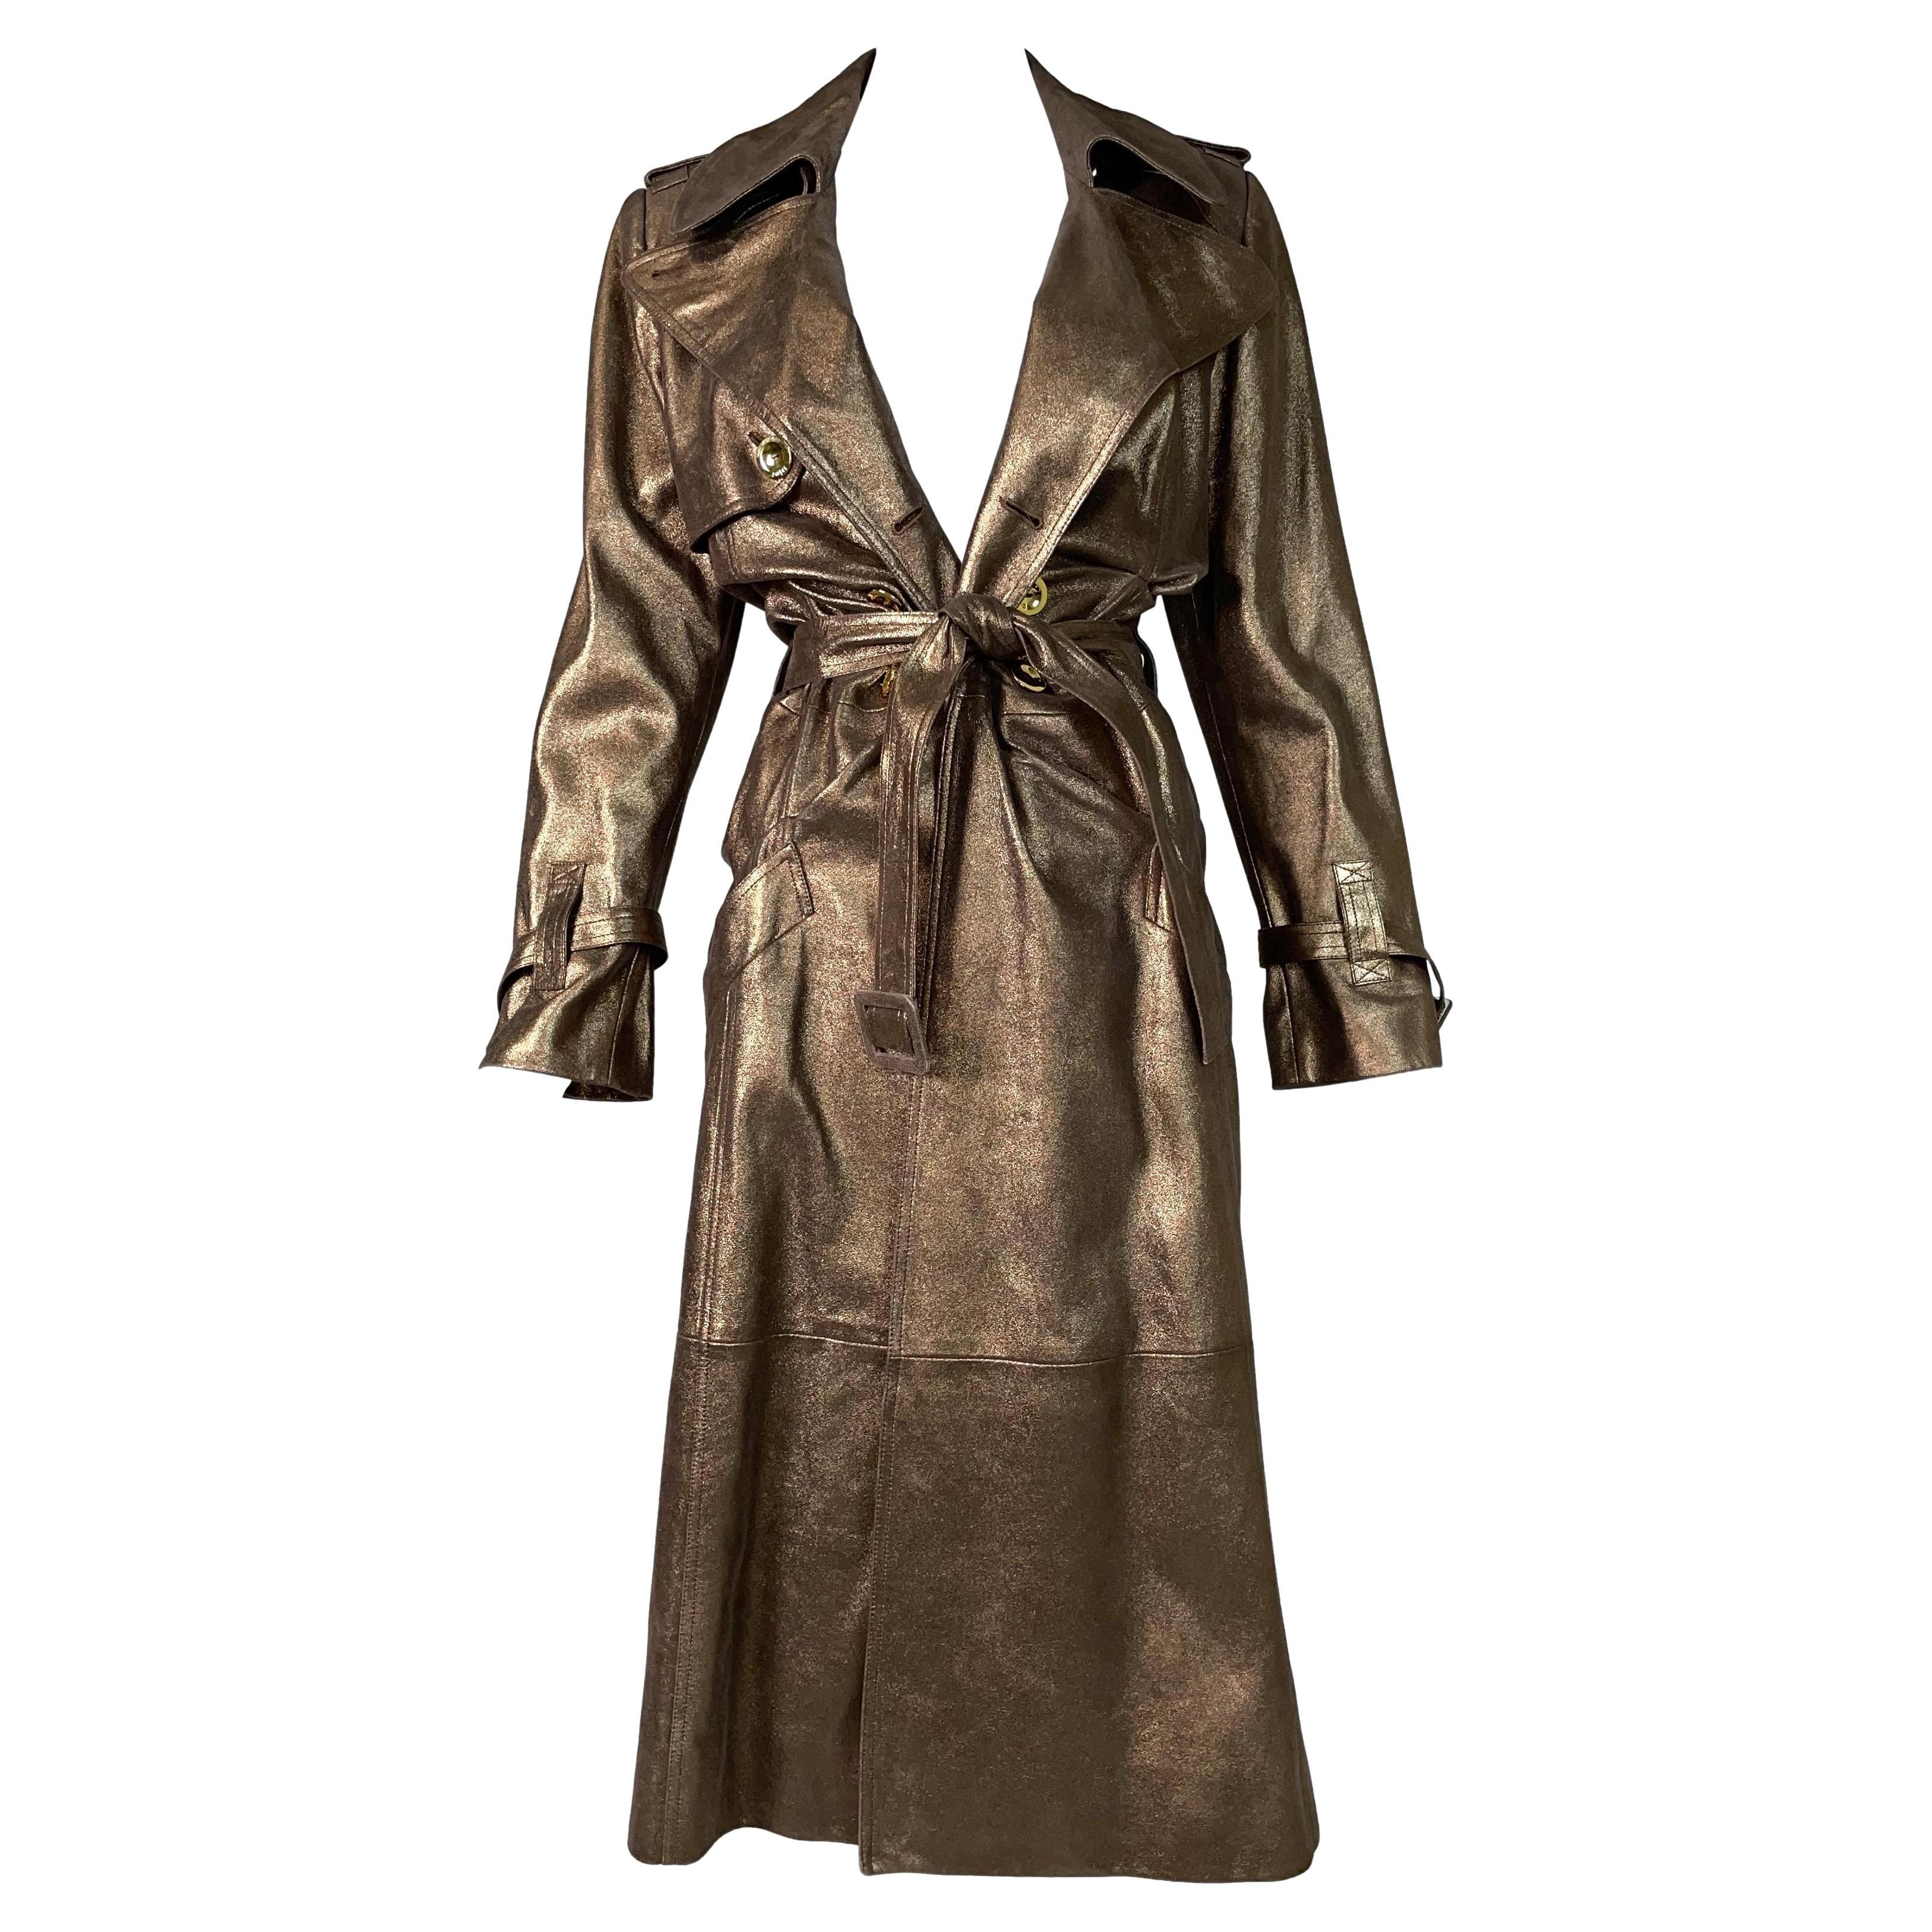 S/S 2004 Christian Dior by John Galliano Runway Bronze Metallic Leather Coat